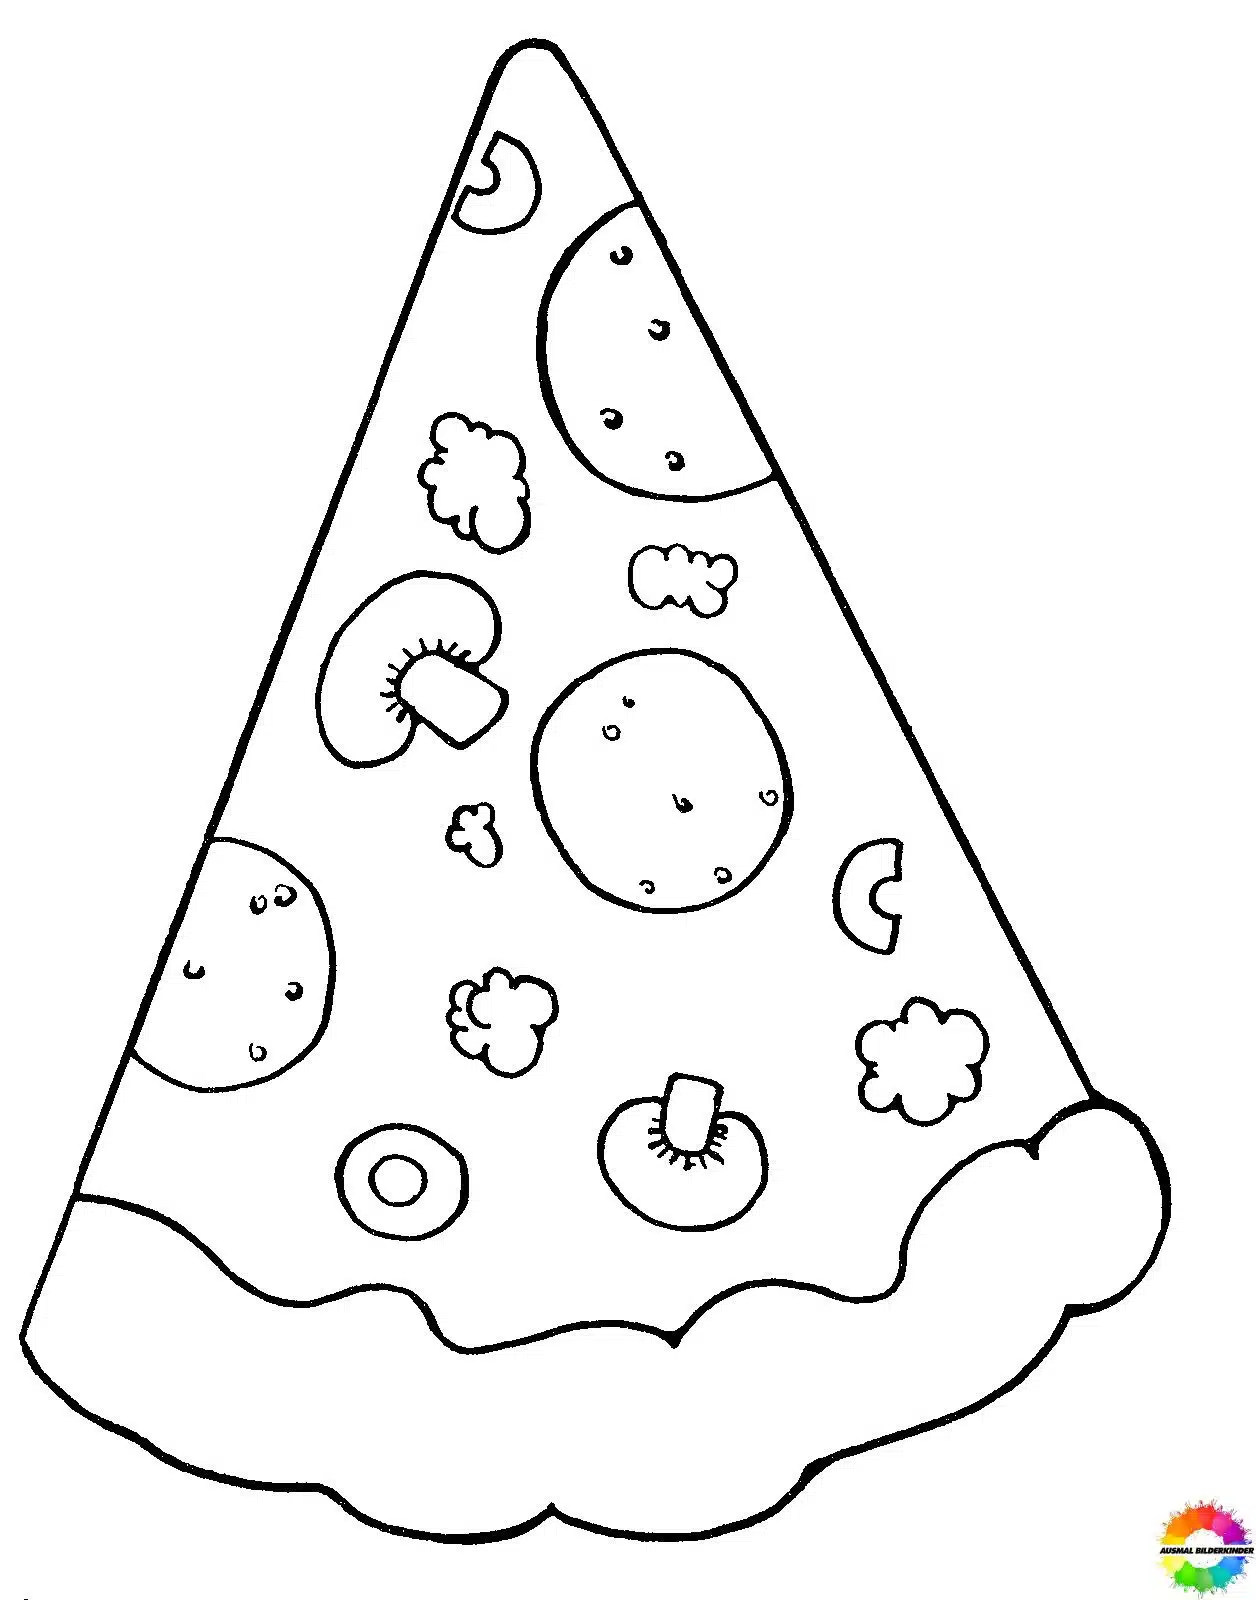 Pizza 19